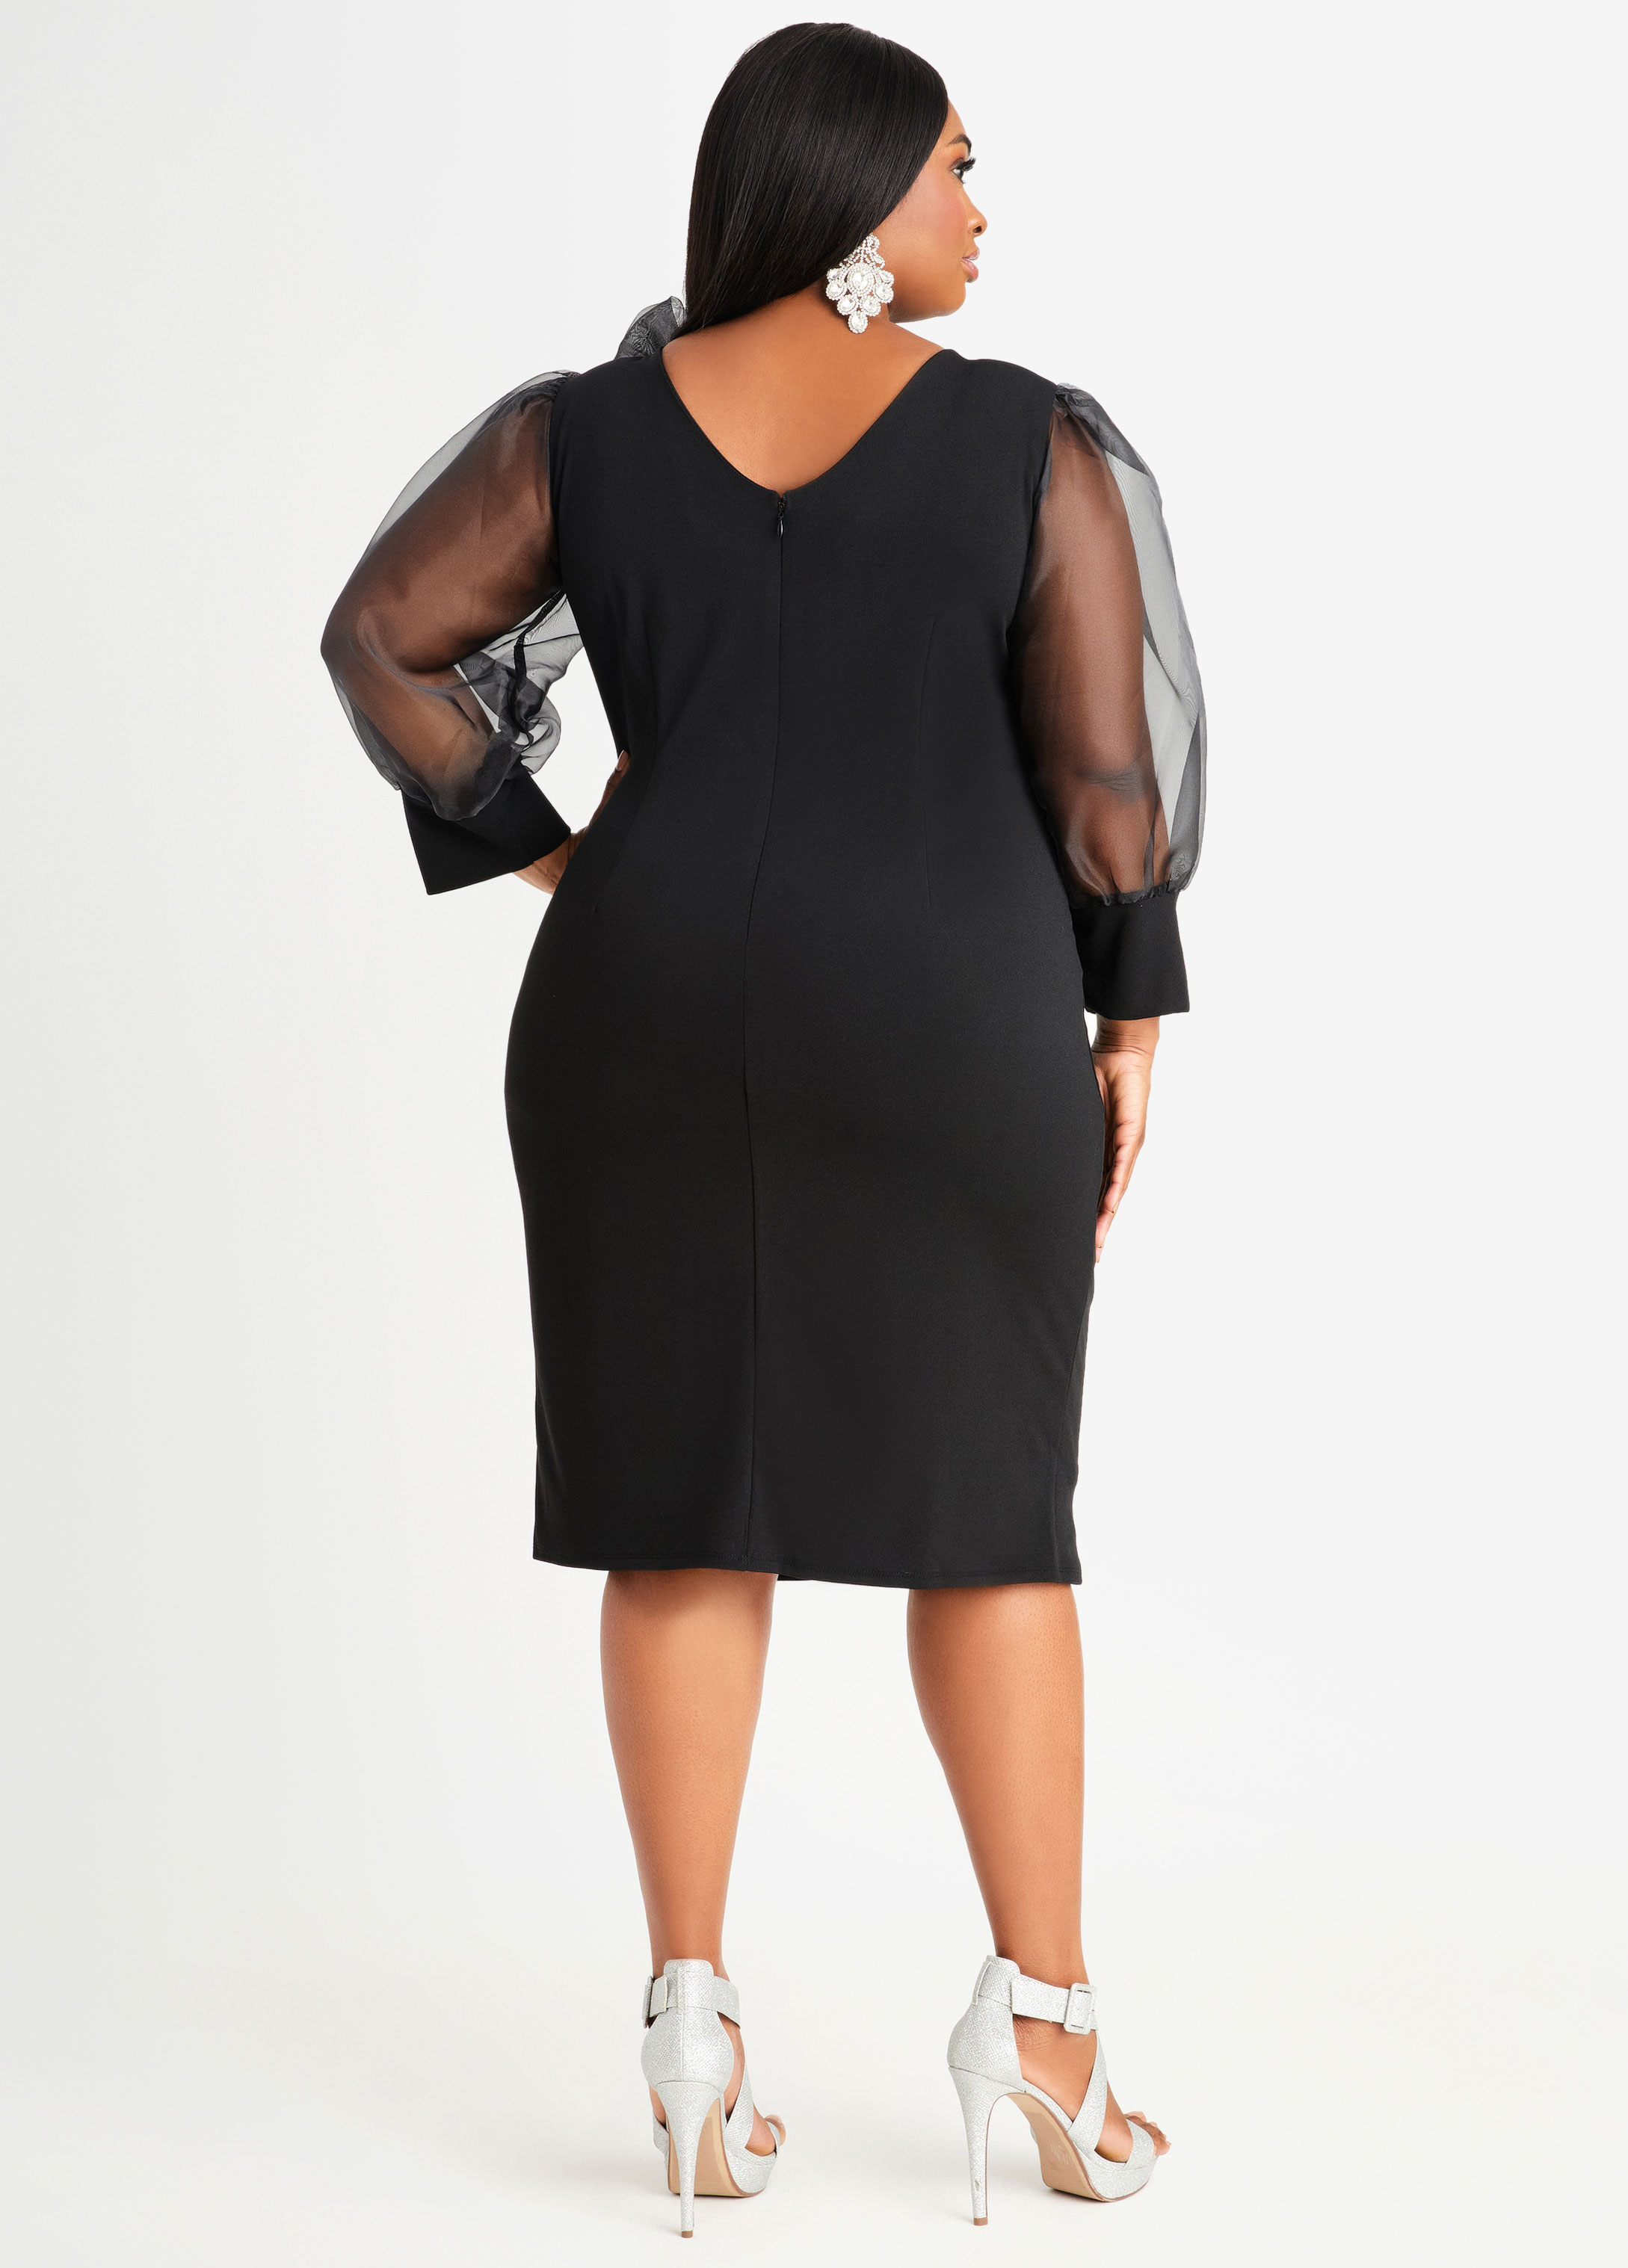 WOMENS PLUS SIZE 3X (22/24) - SPENCER & SHAW, Thick Black Dress